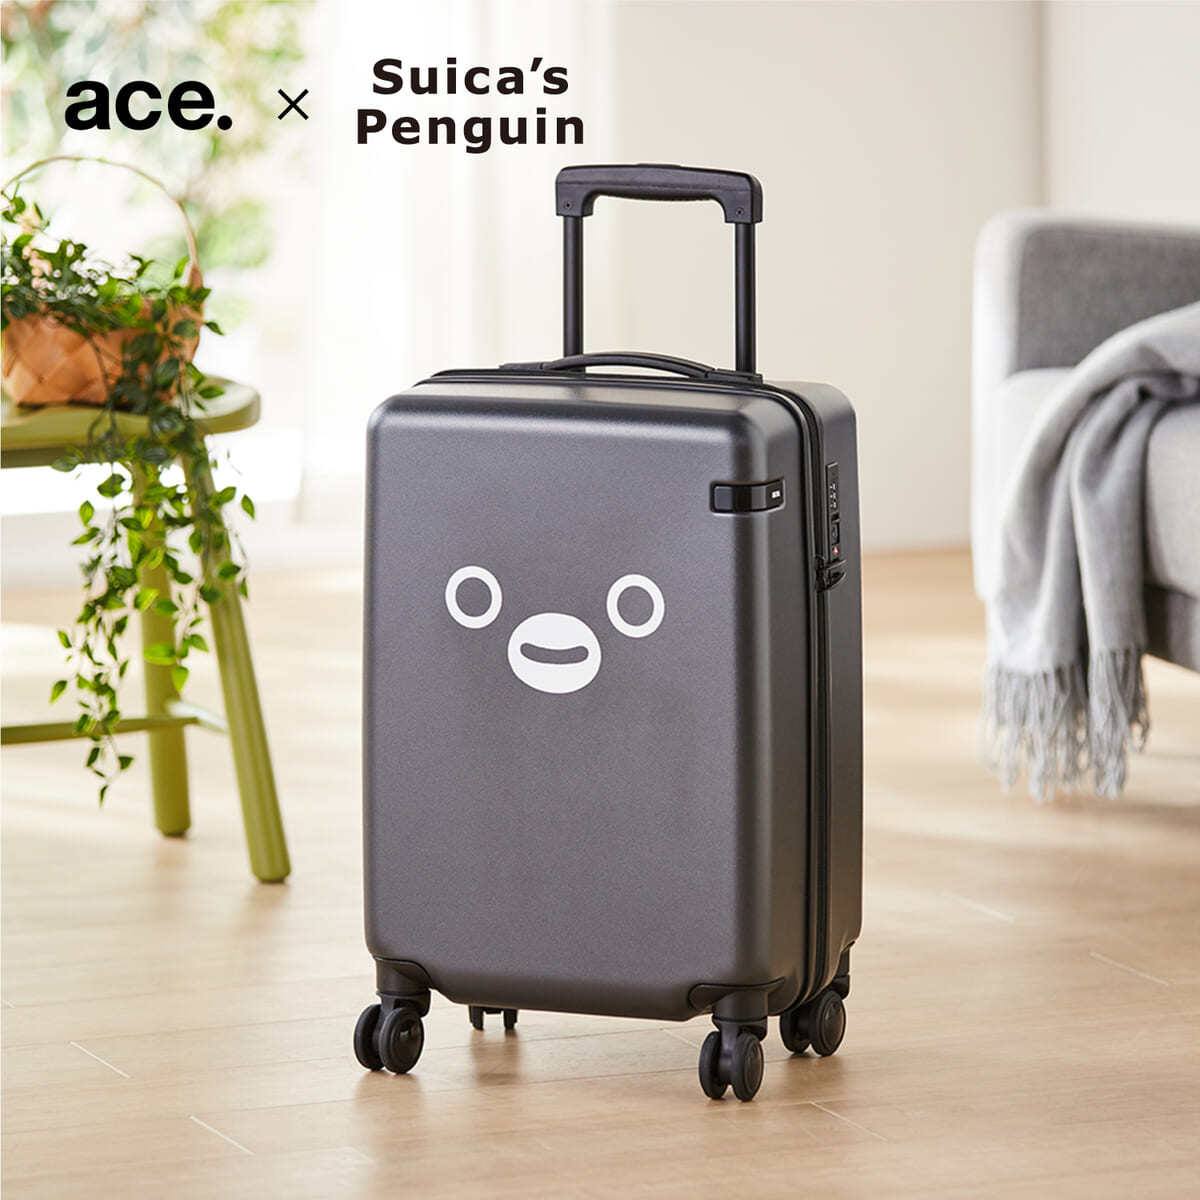 【ace.×Suicaのペンギン】スーツケース